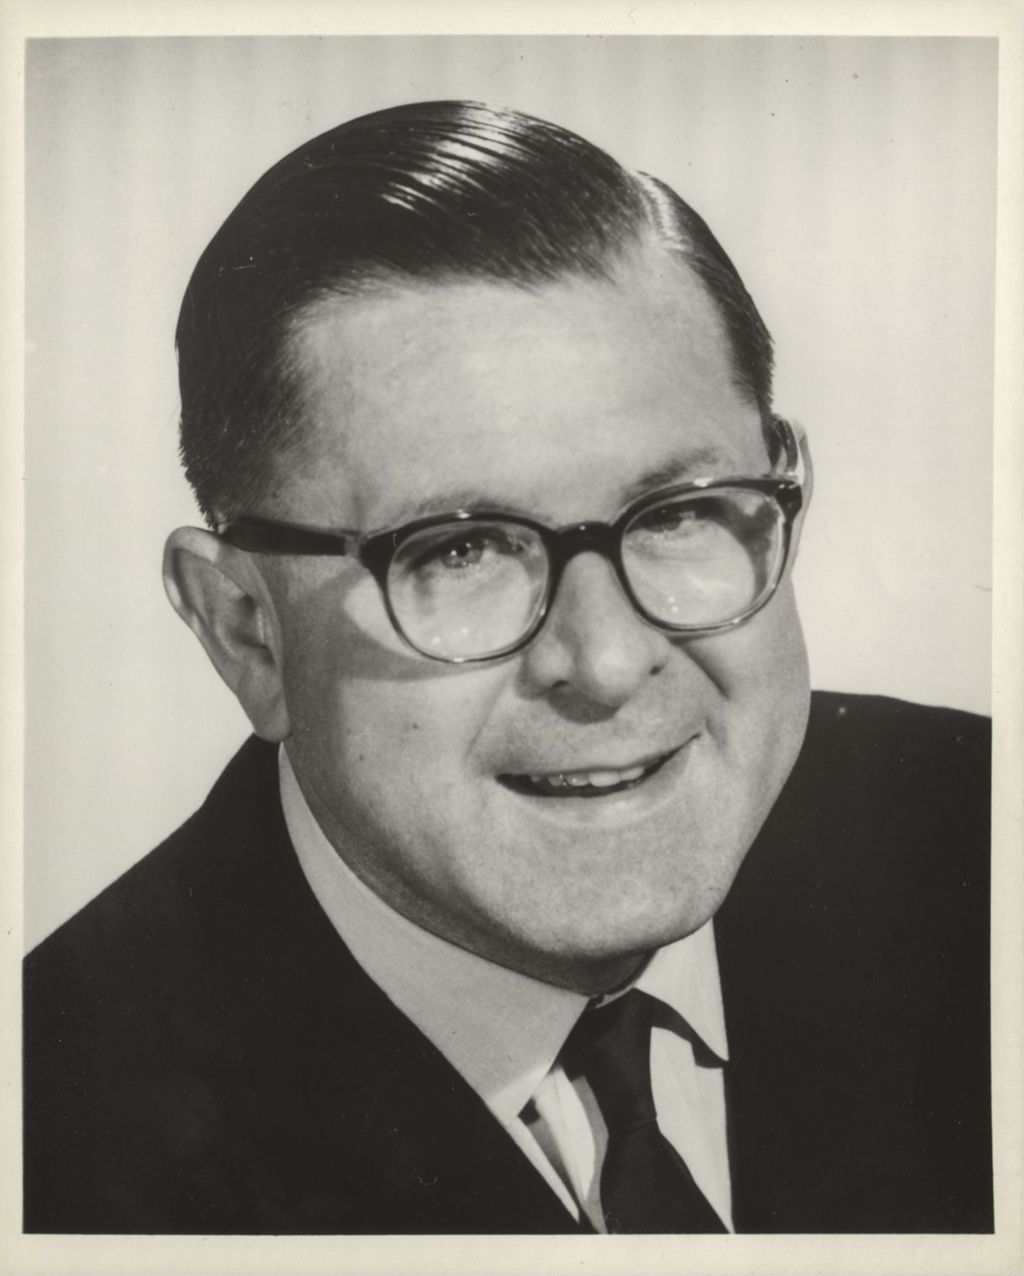 Miniature of Portrait of a man wearing glasses